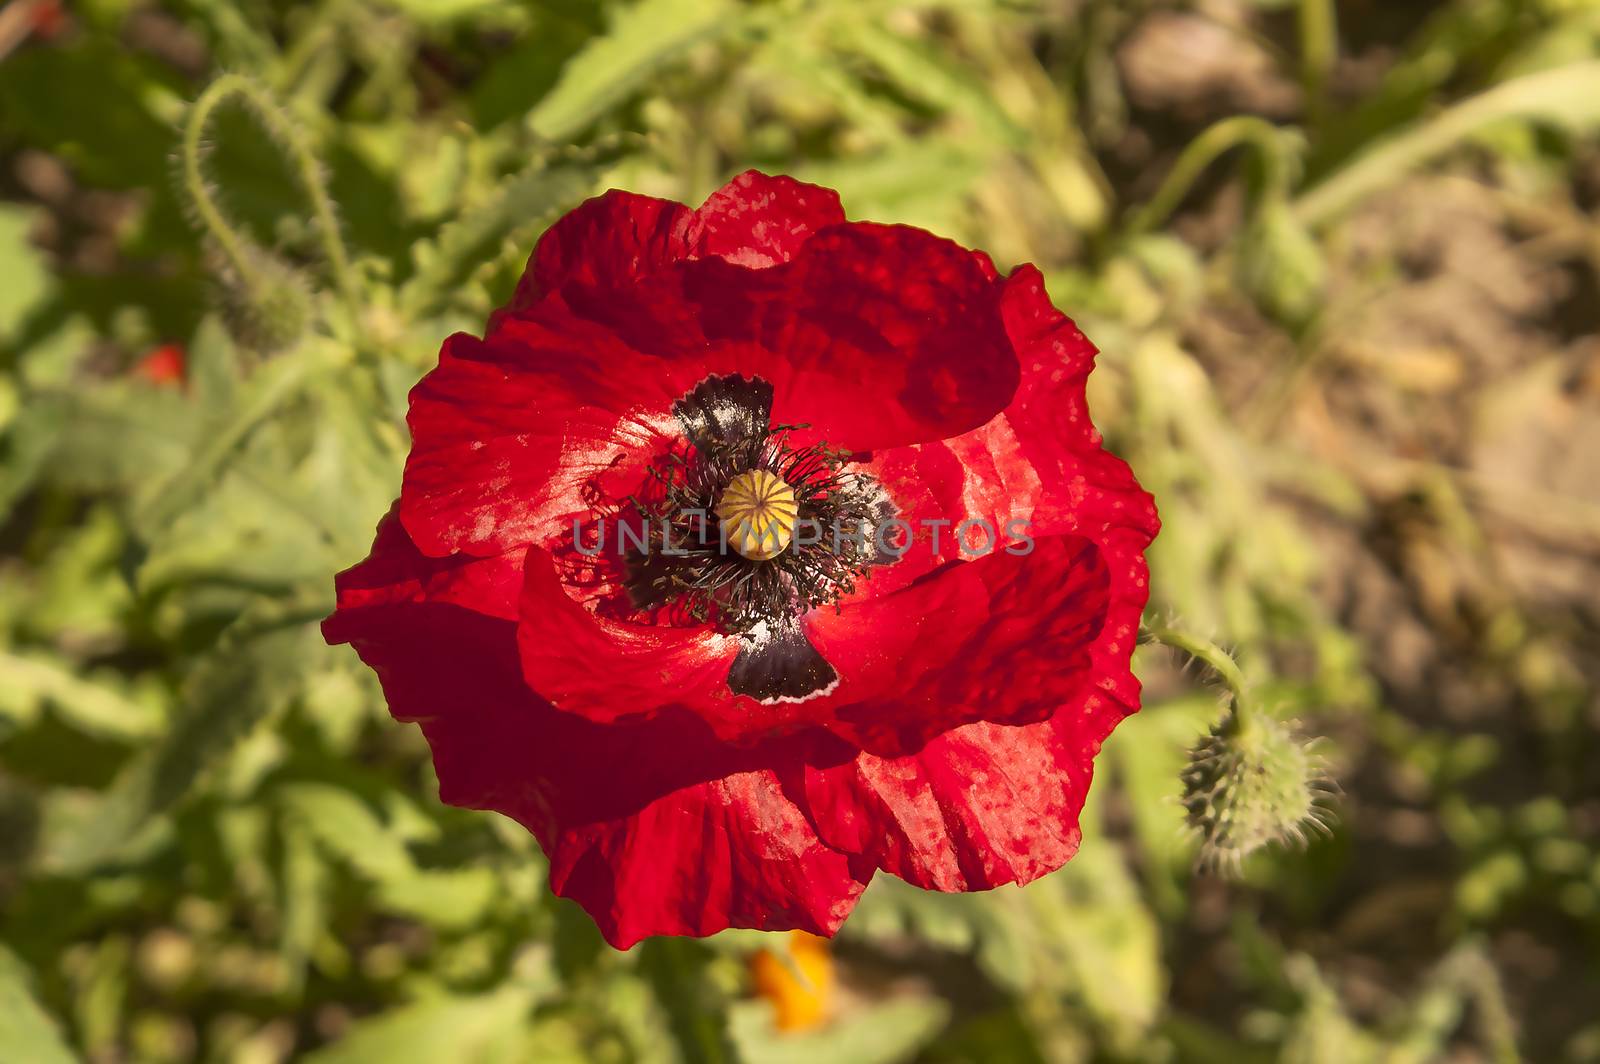 Flower of red poppy by antonius_